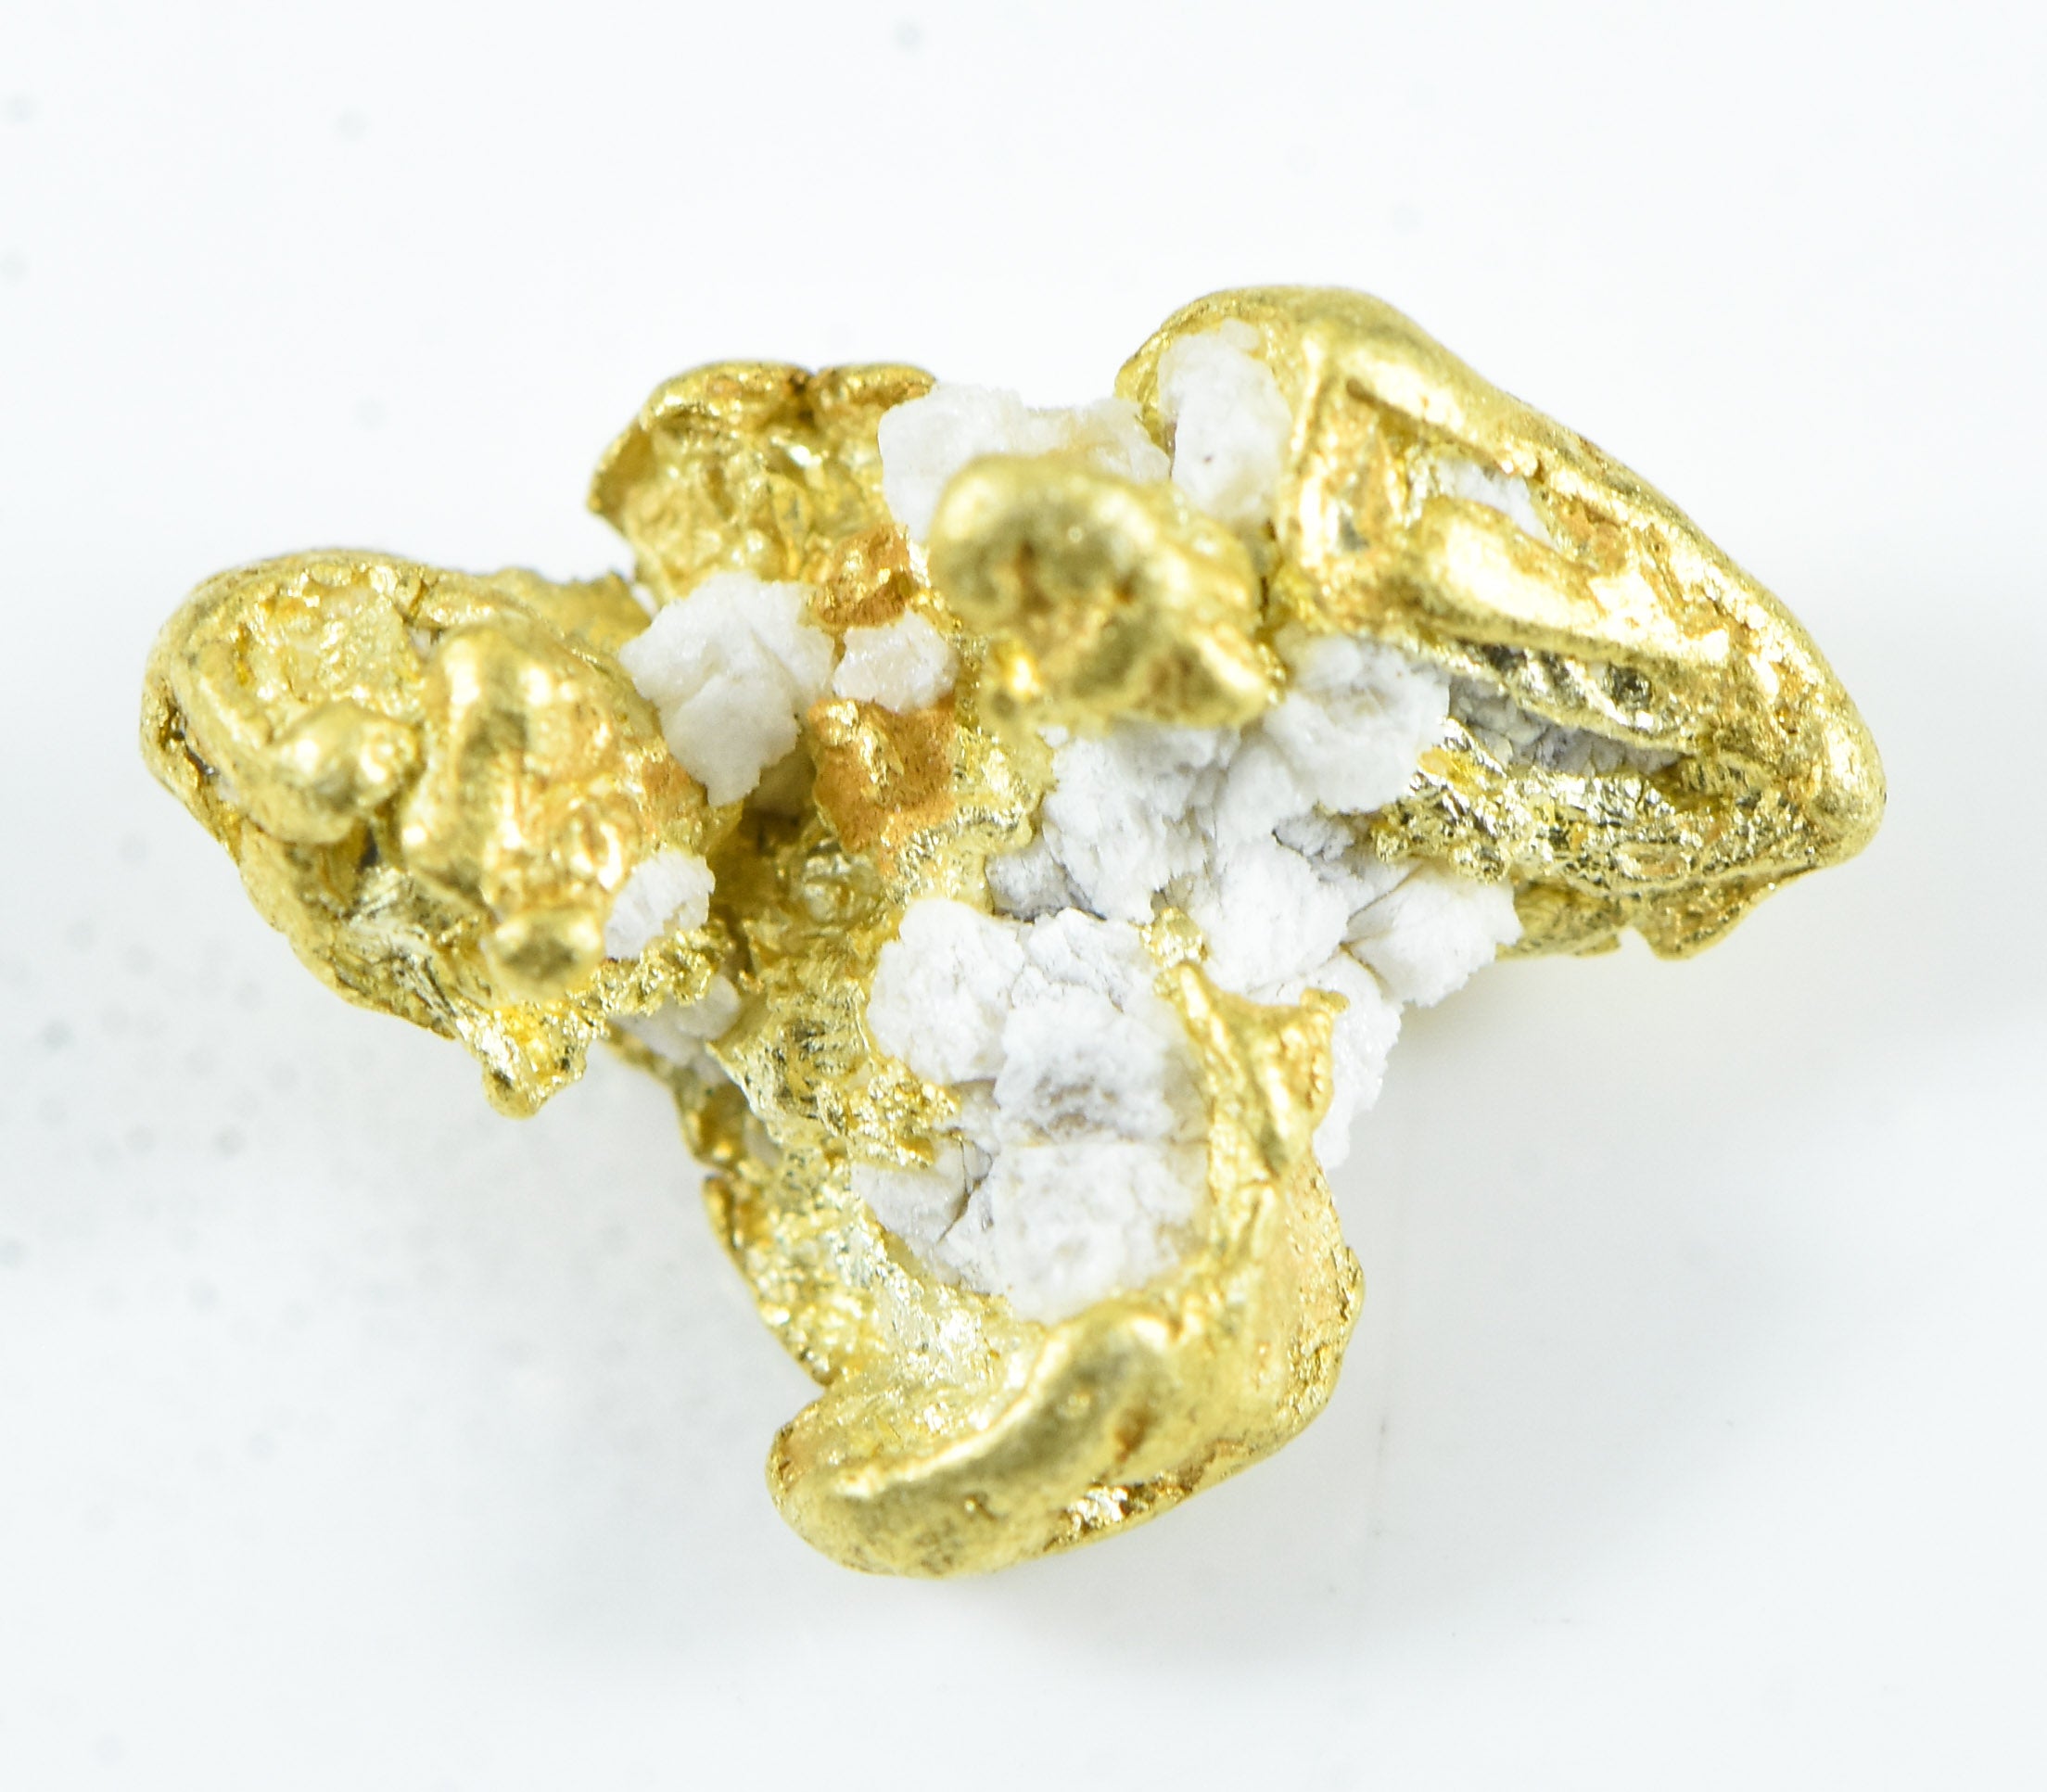 QN-17 "Alaskan BC Gold Nuggets with Quartz" Genuine 1.87 Grams